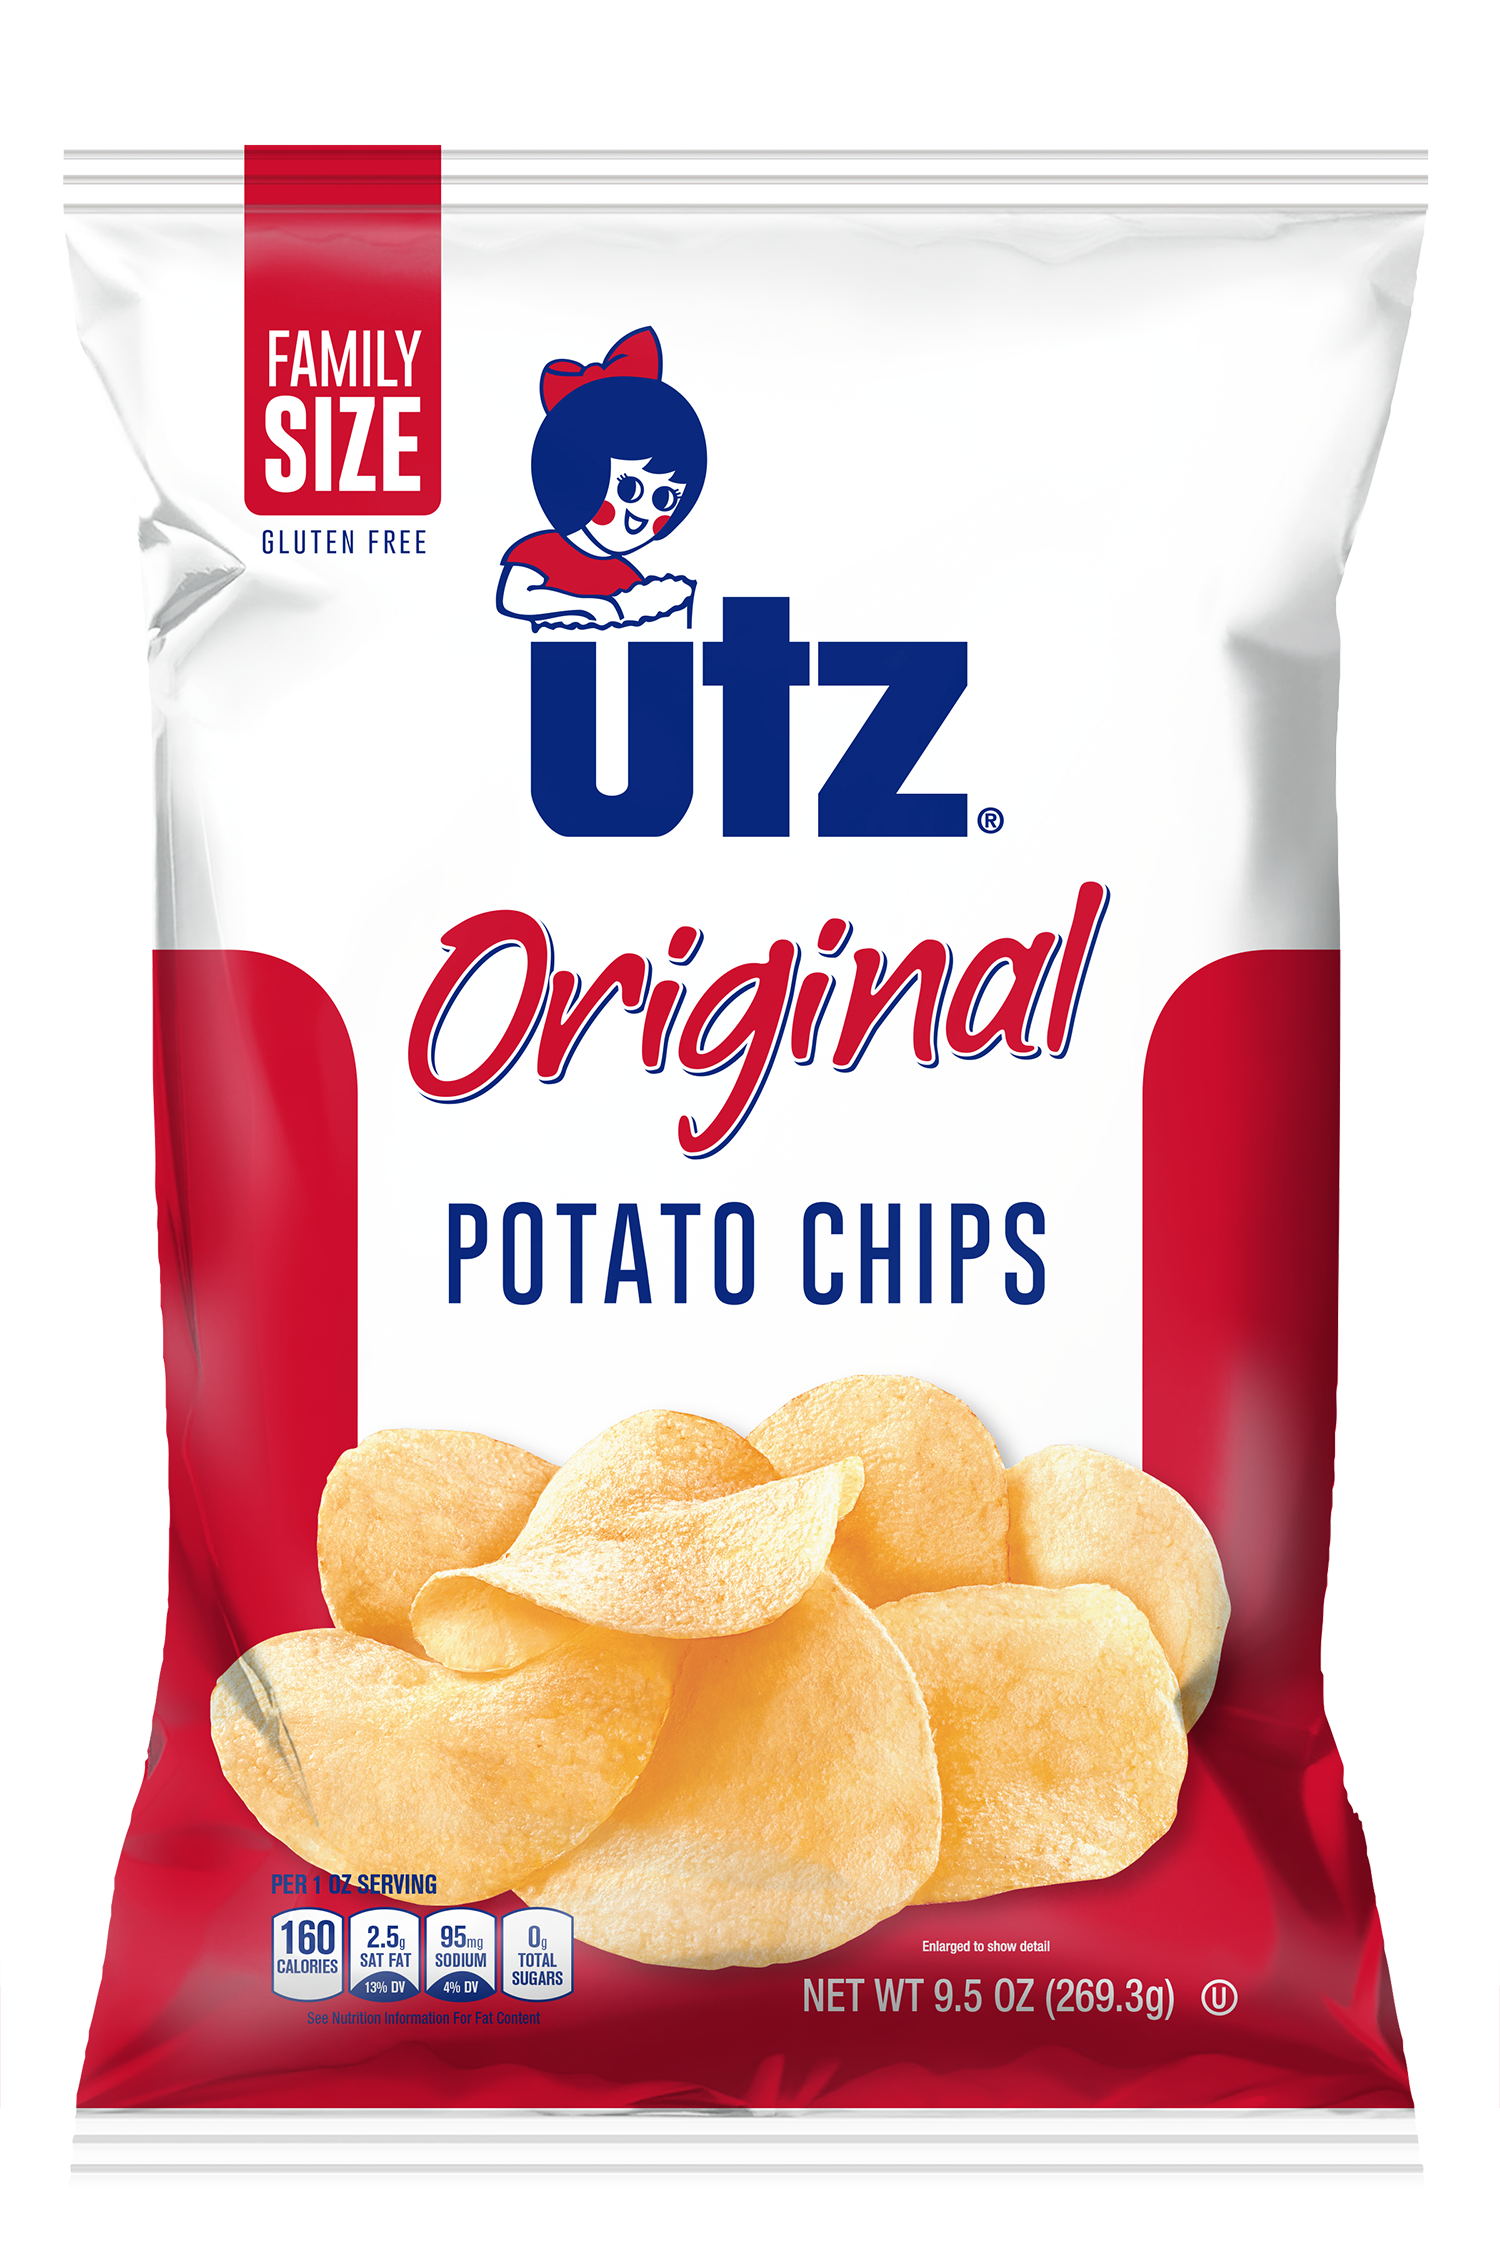 Utz Potato Chip Package